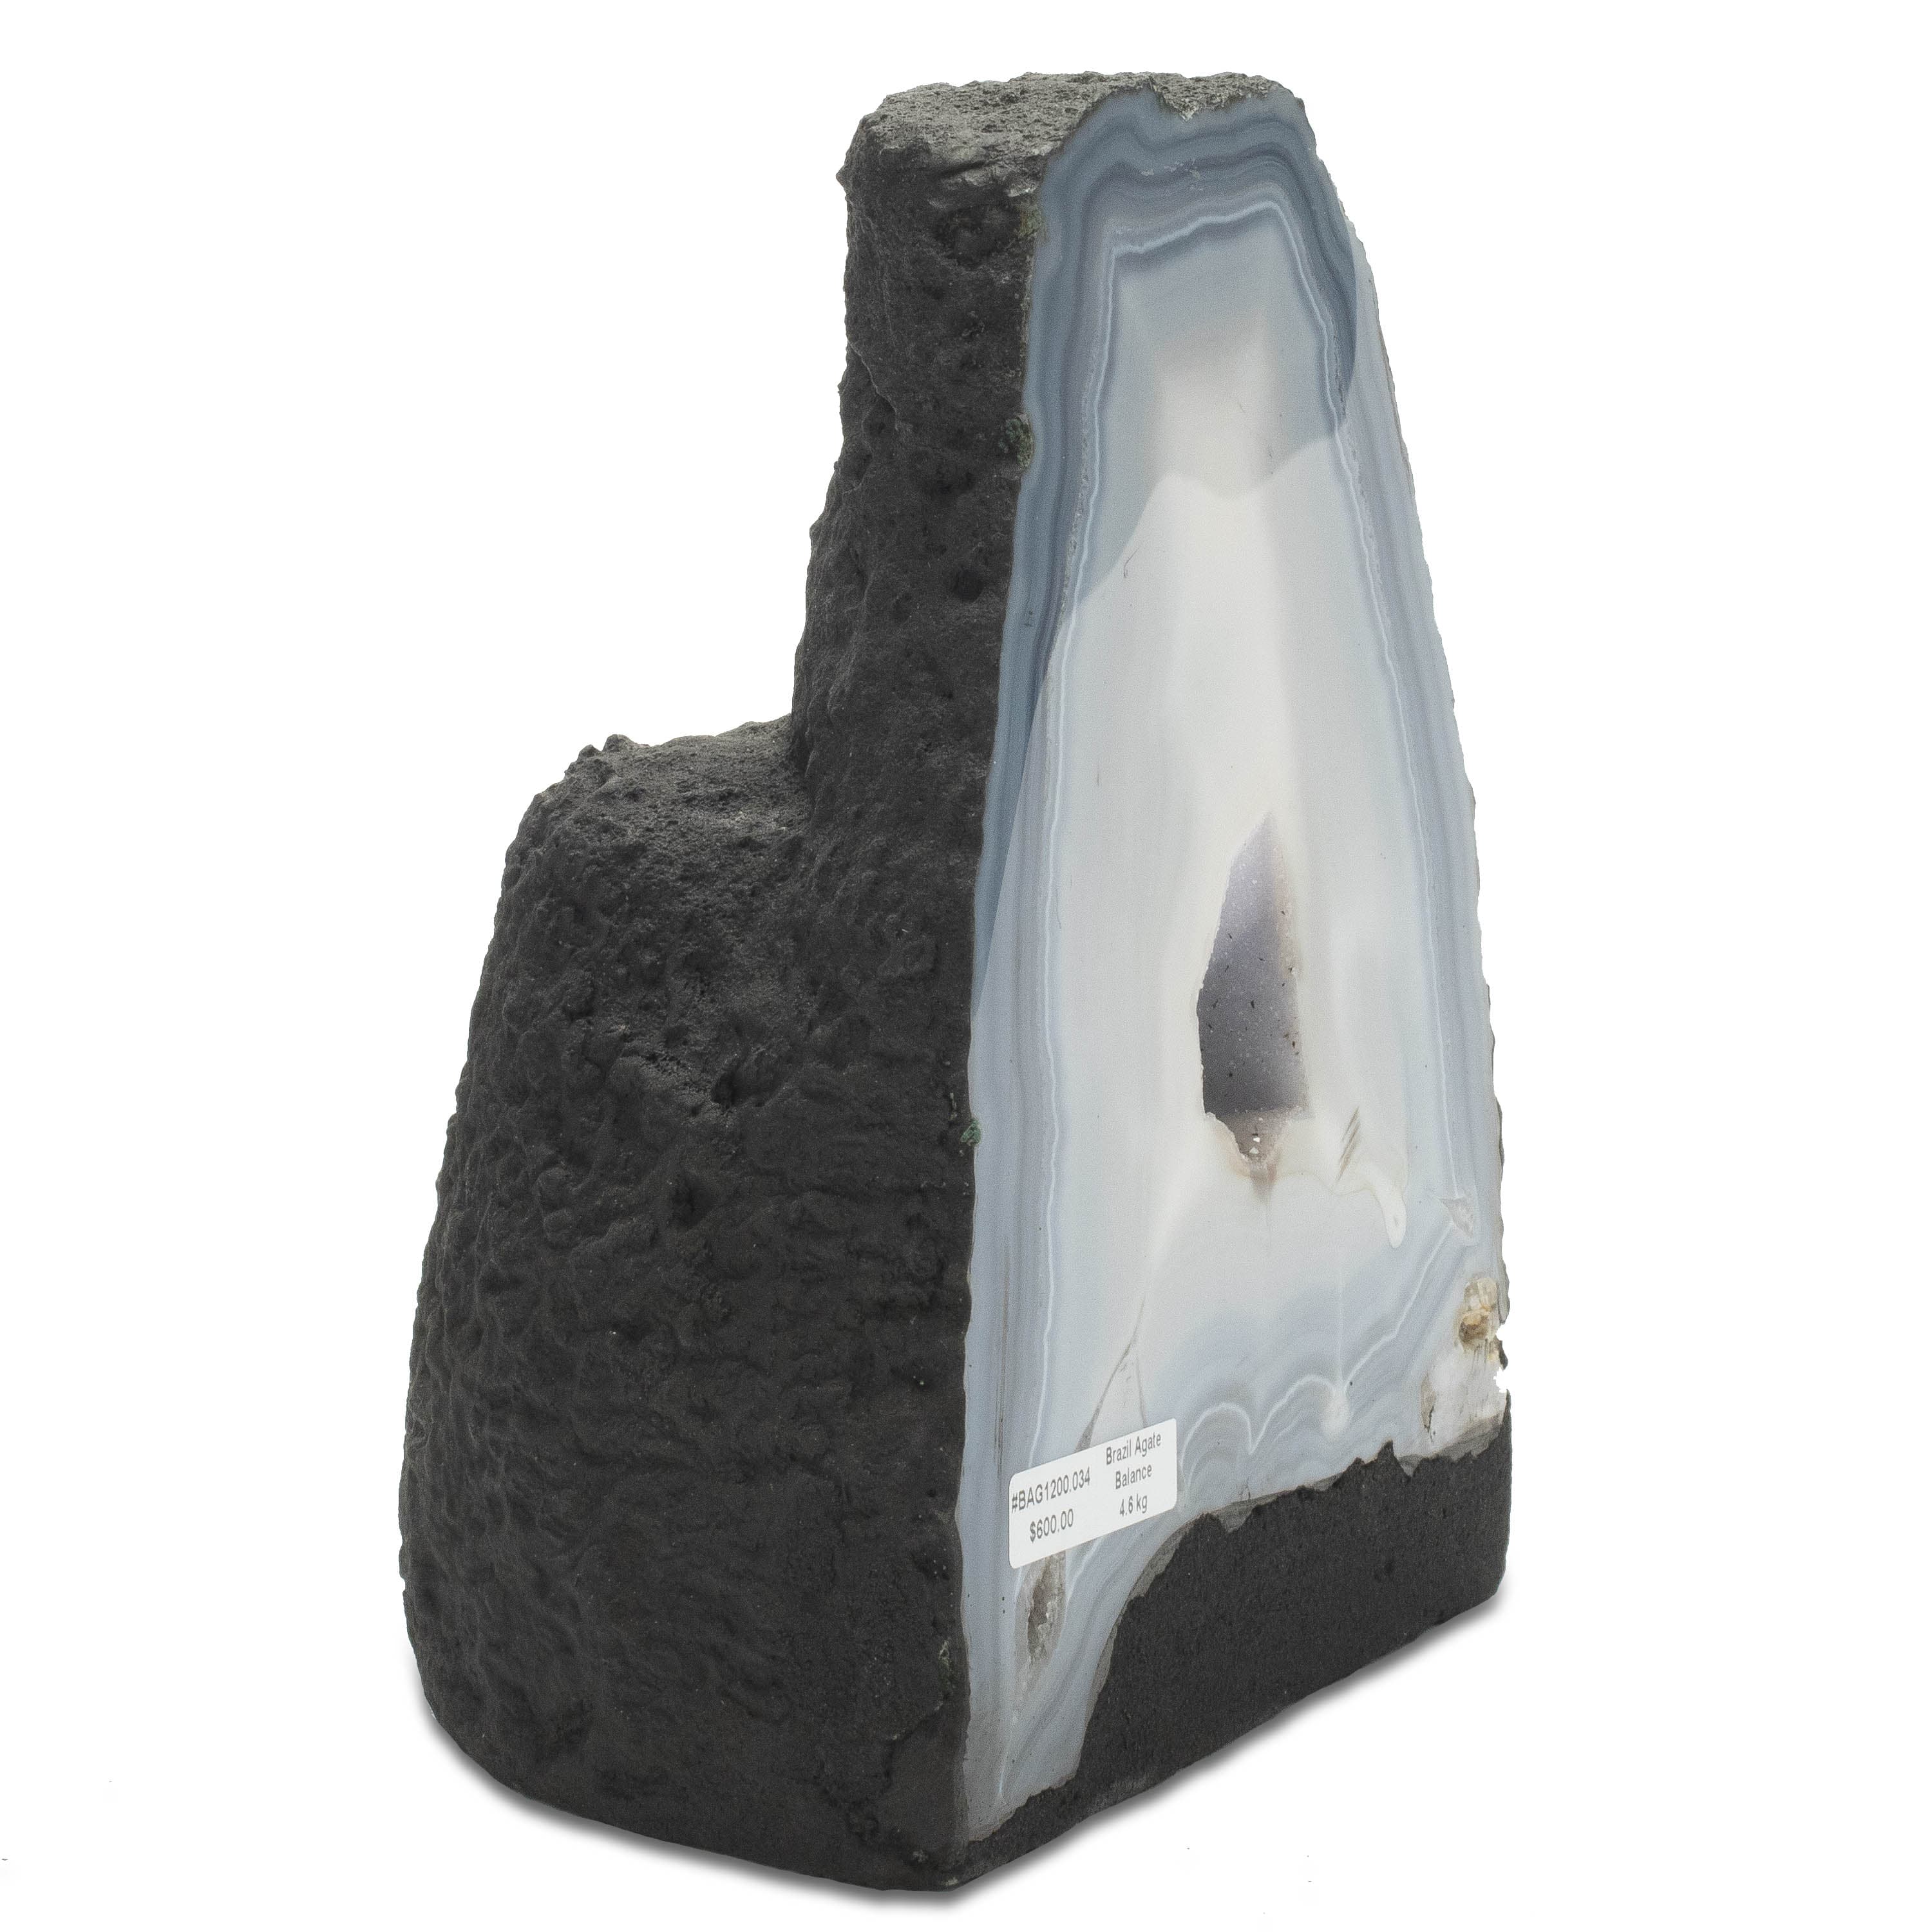 Kalifano Agate Agate Geode - 8.5 in. / 10 lbs BAG1200.034